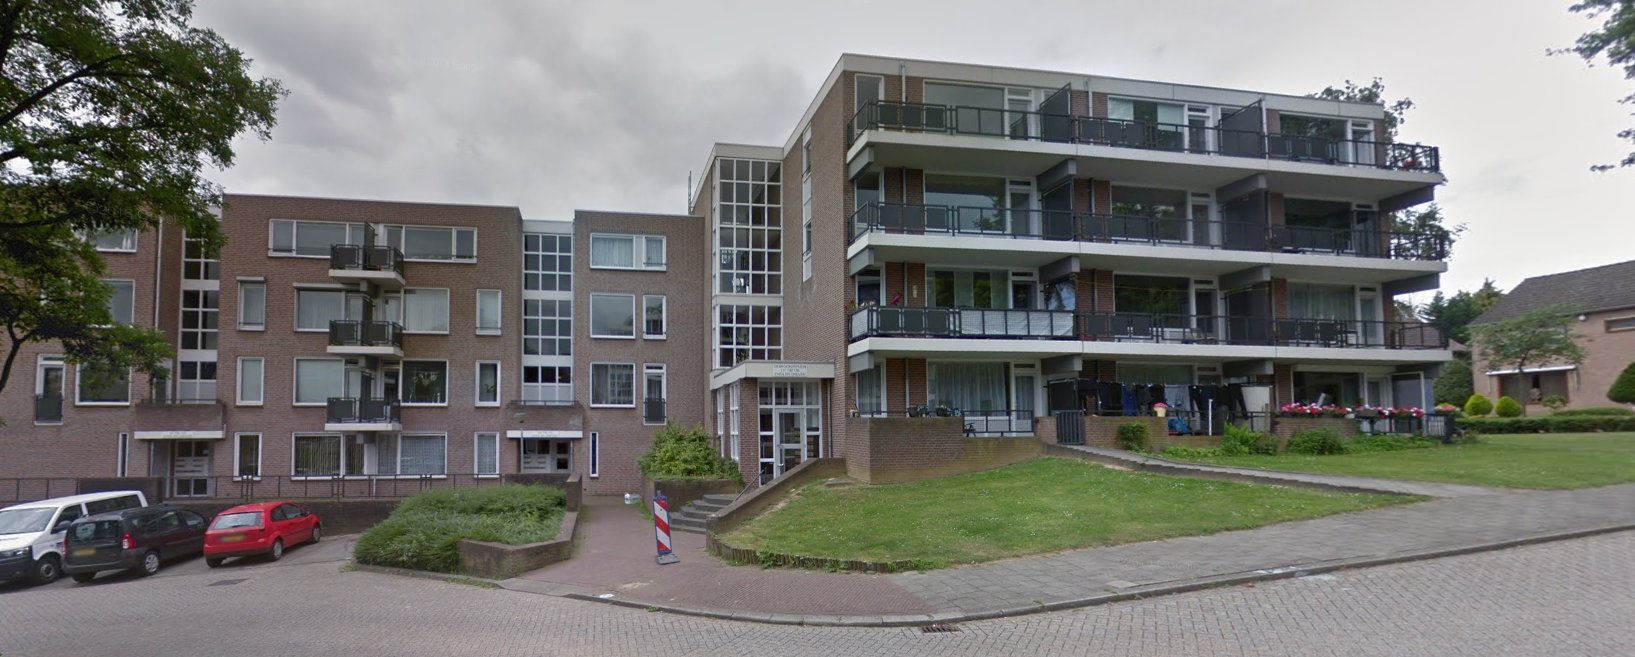 Gebrookerplein 52, 6431 LX Hoensbroek, Nederland